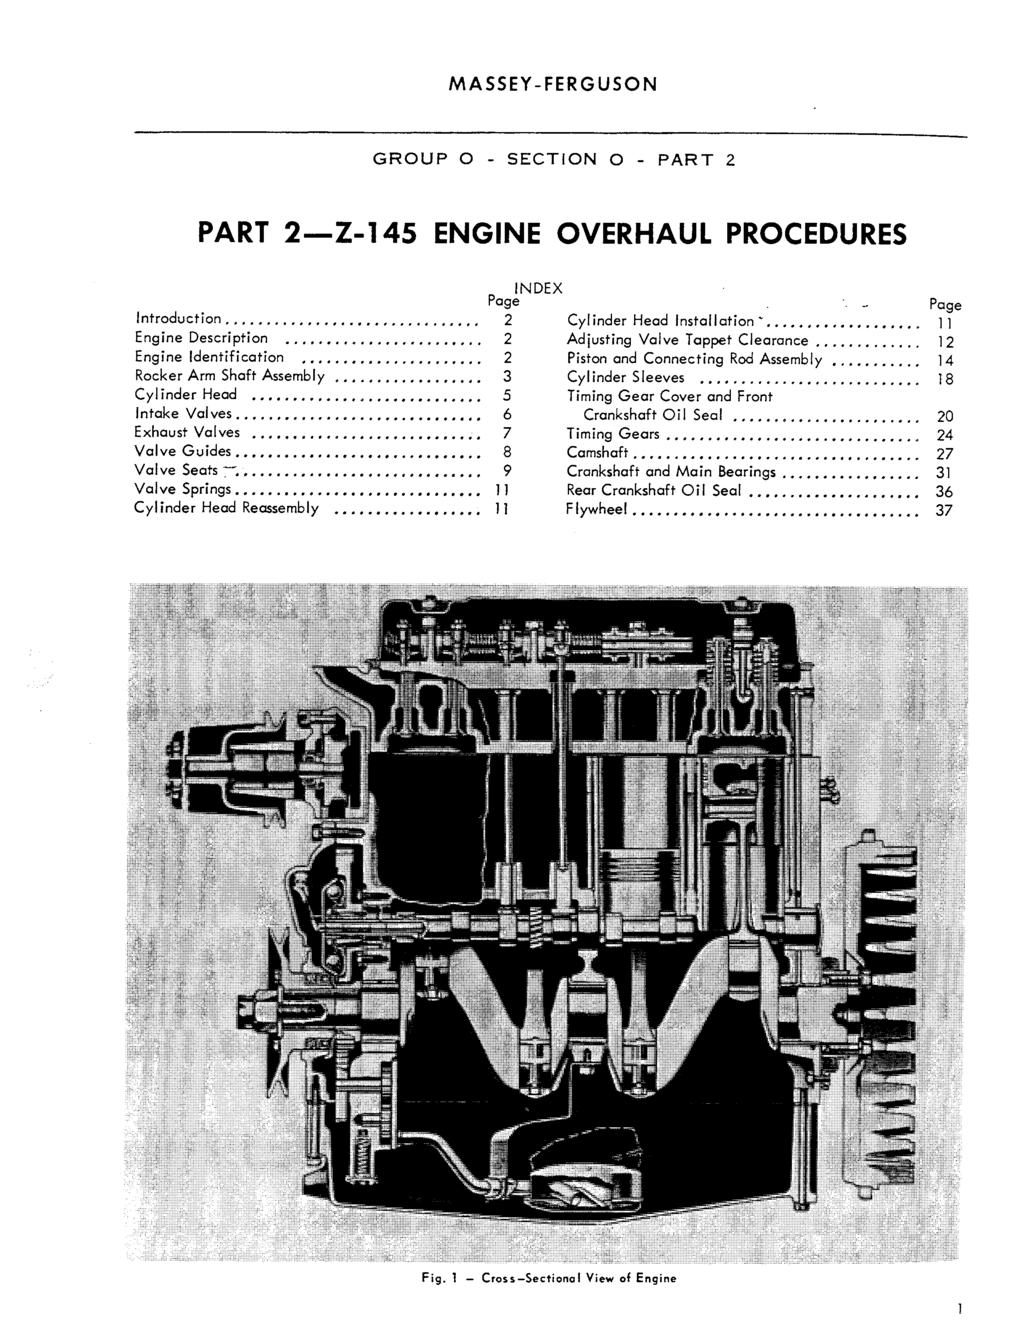 GROUP O - SECTION O - PART 2 PART 2-Z-45 ENGINE OVERHAUL PROCEDURES Introduction........... Engine Description.....,....... Engine Identification....... Rocker Arm Shaft Assembly..... Cylinder Head.